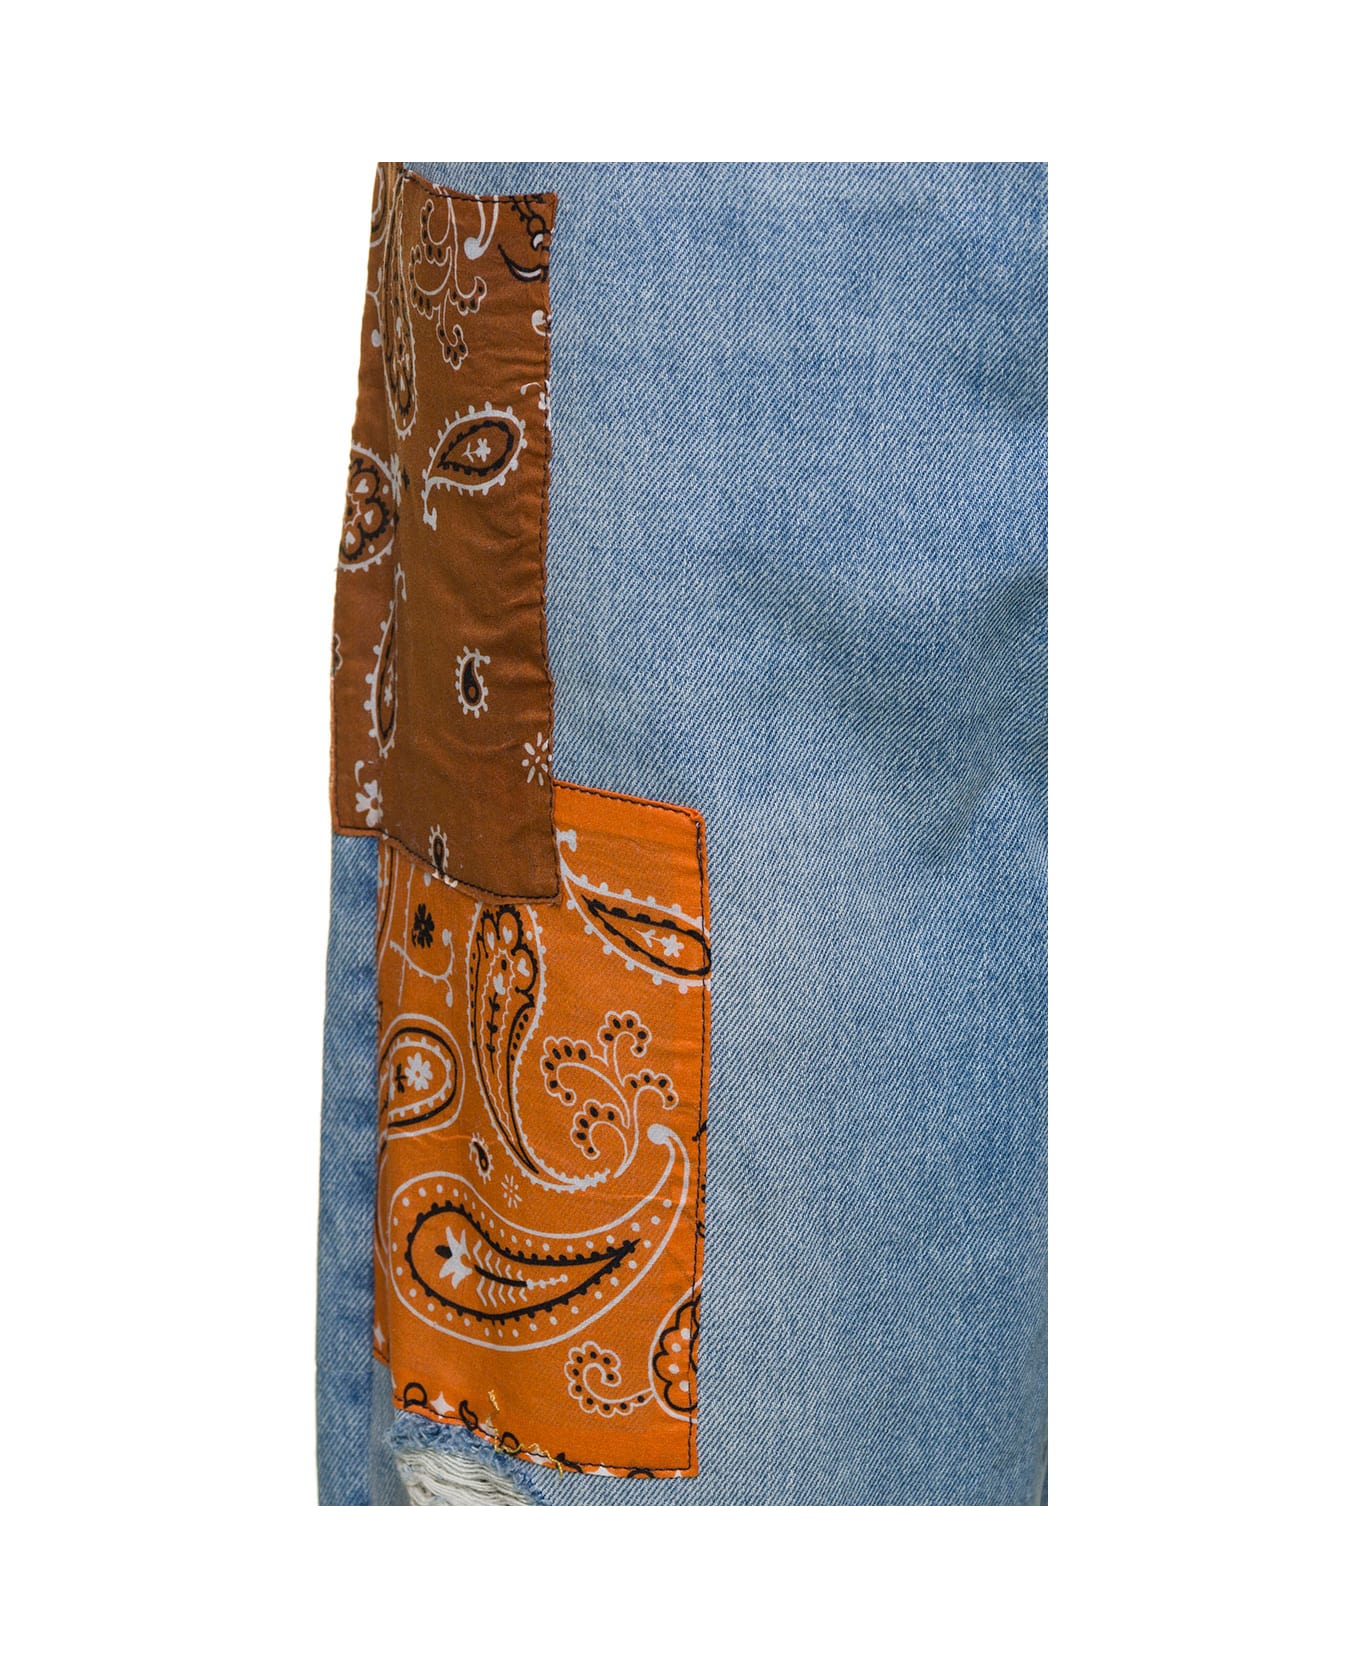 Alanui Light Blue Jeans With Bandana Patchwork In Cotton Denim Woman - Blu